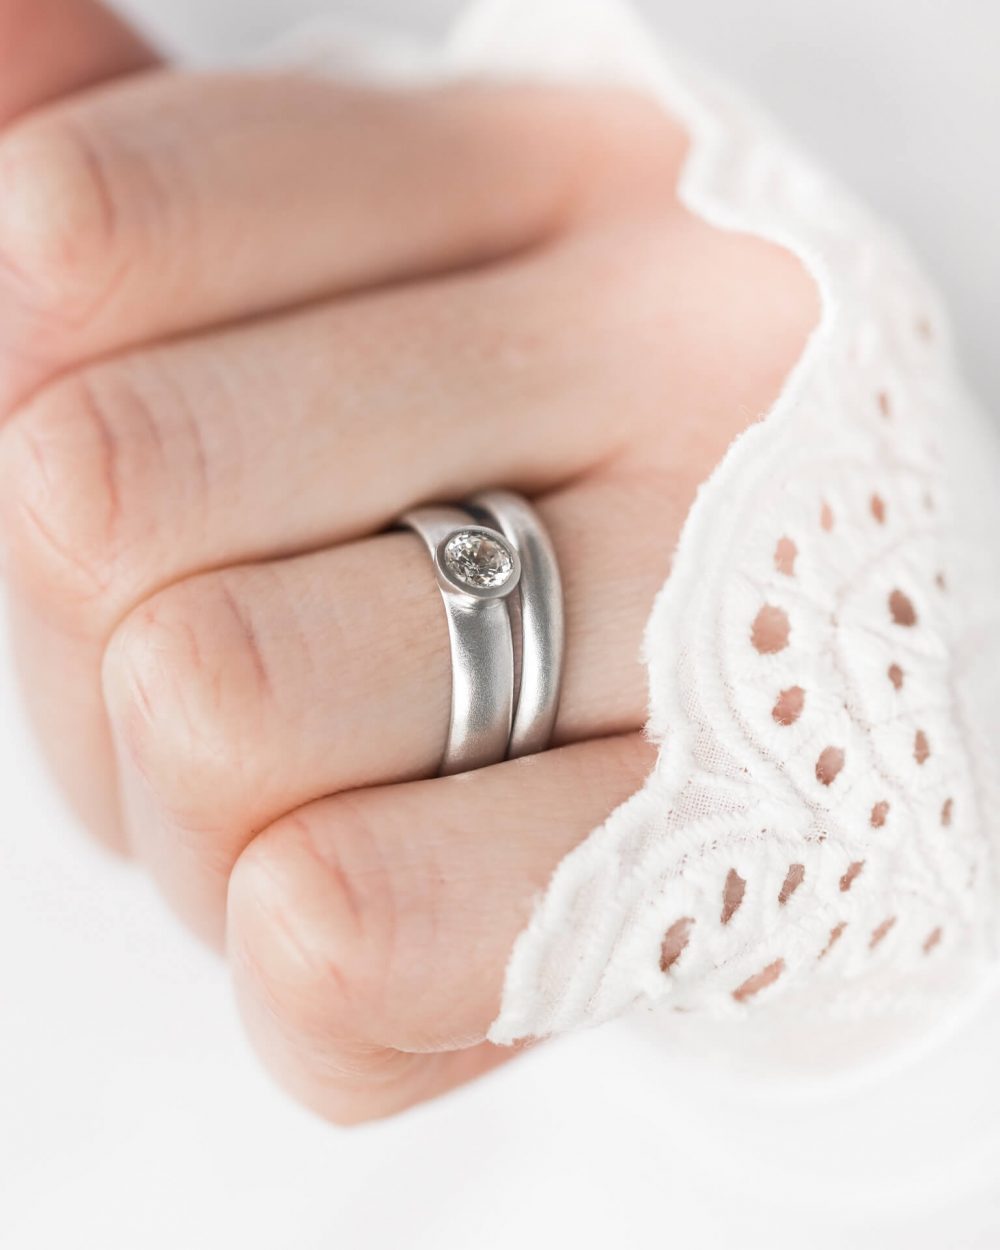 Grand Diamond Engagement Ring And Wedding Ring Jacks Turner Bristol